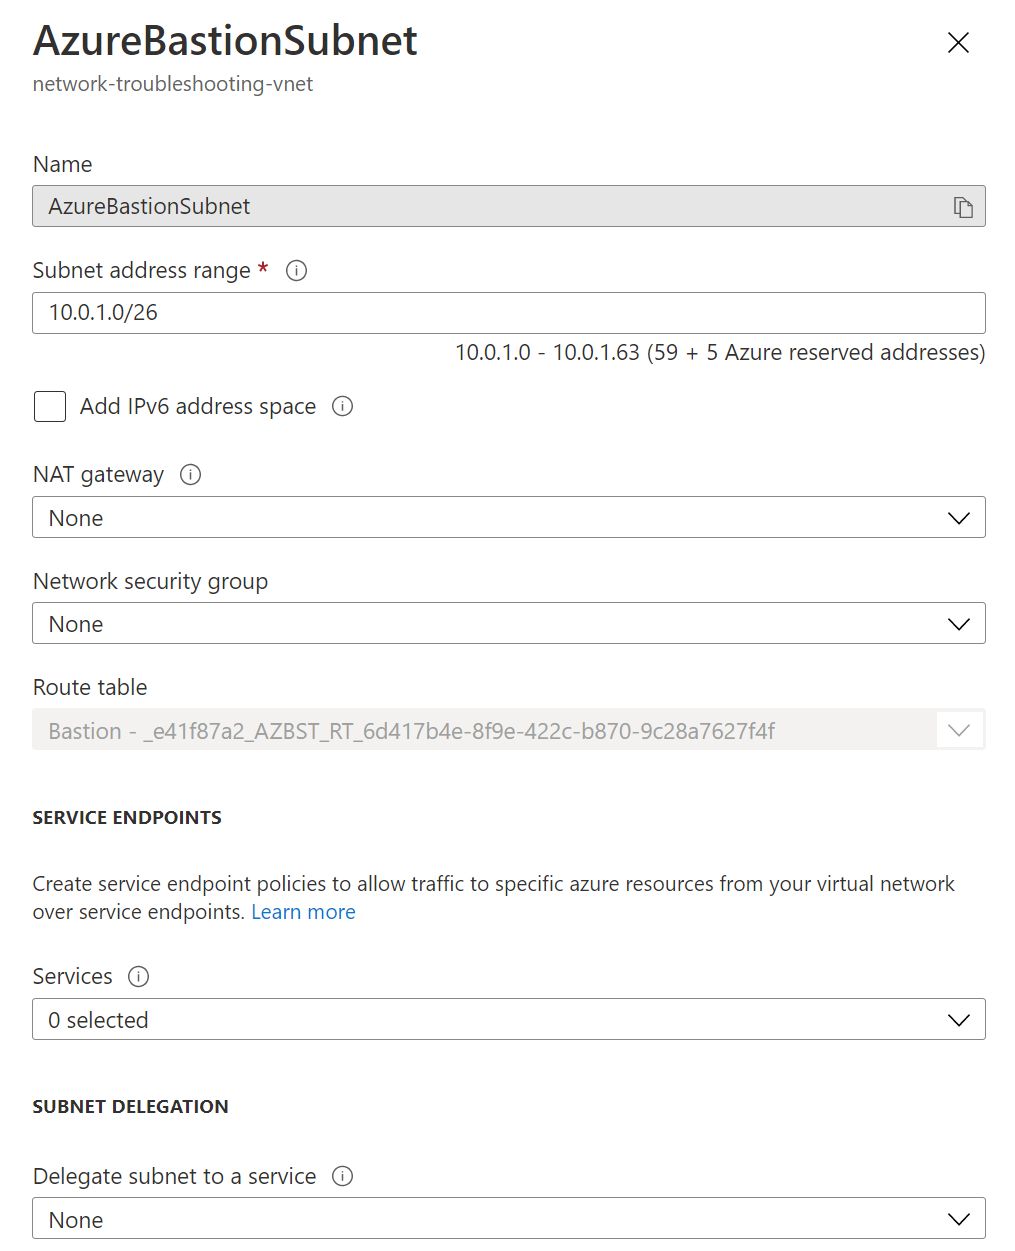 A screenshot of the AzureBastionSubnet subnet settings.